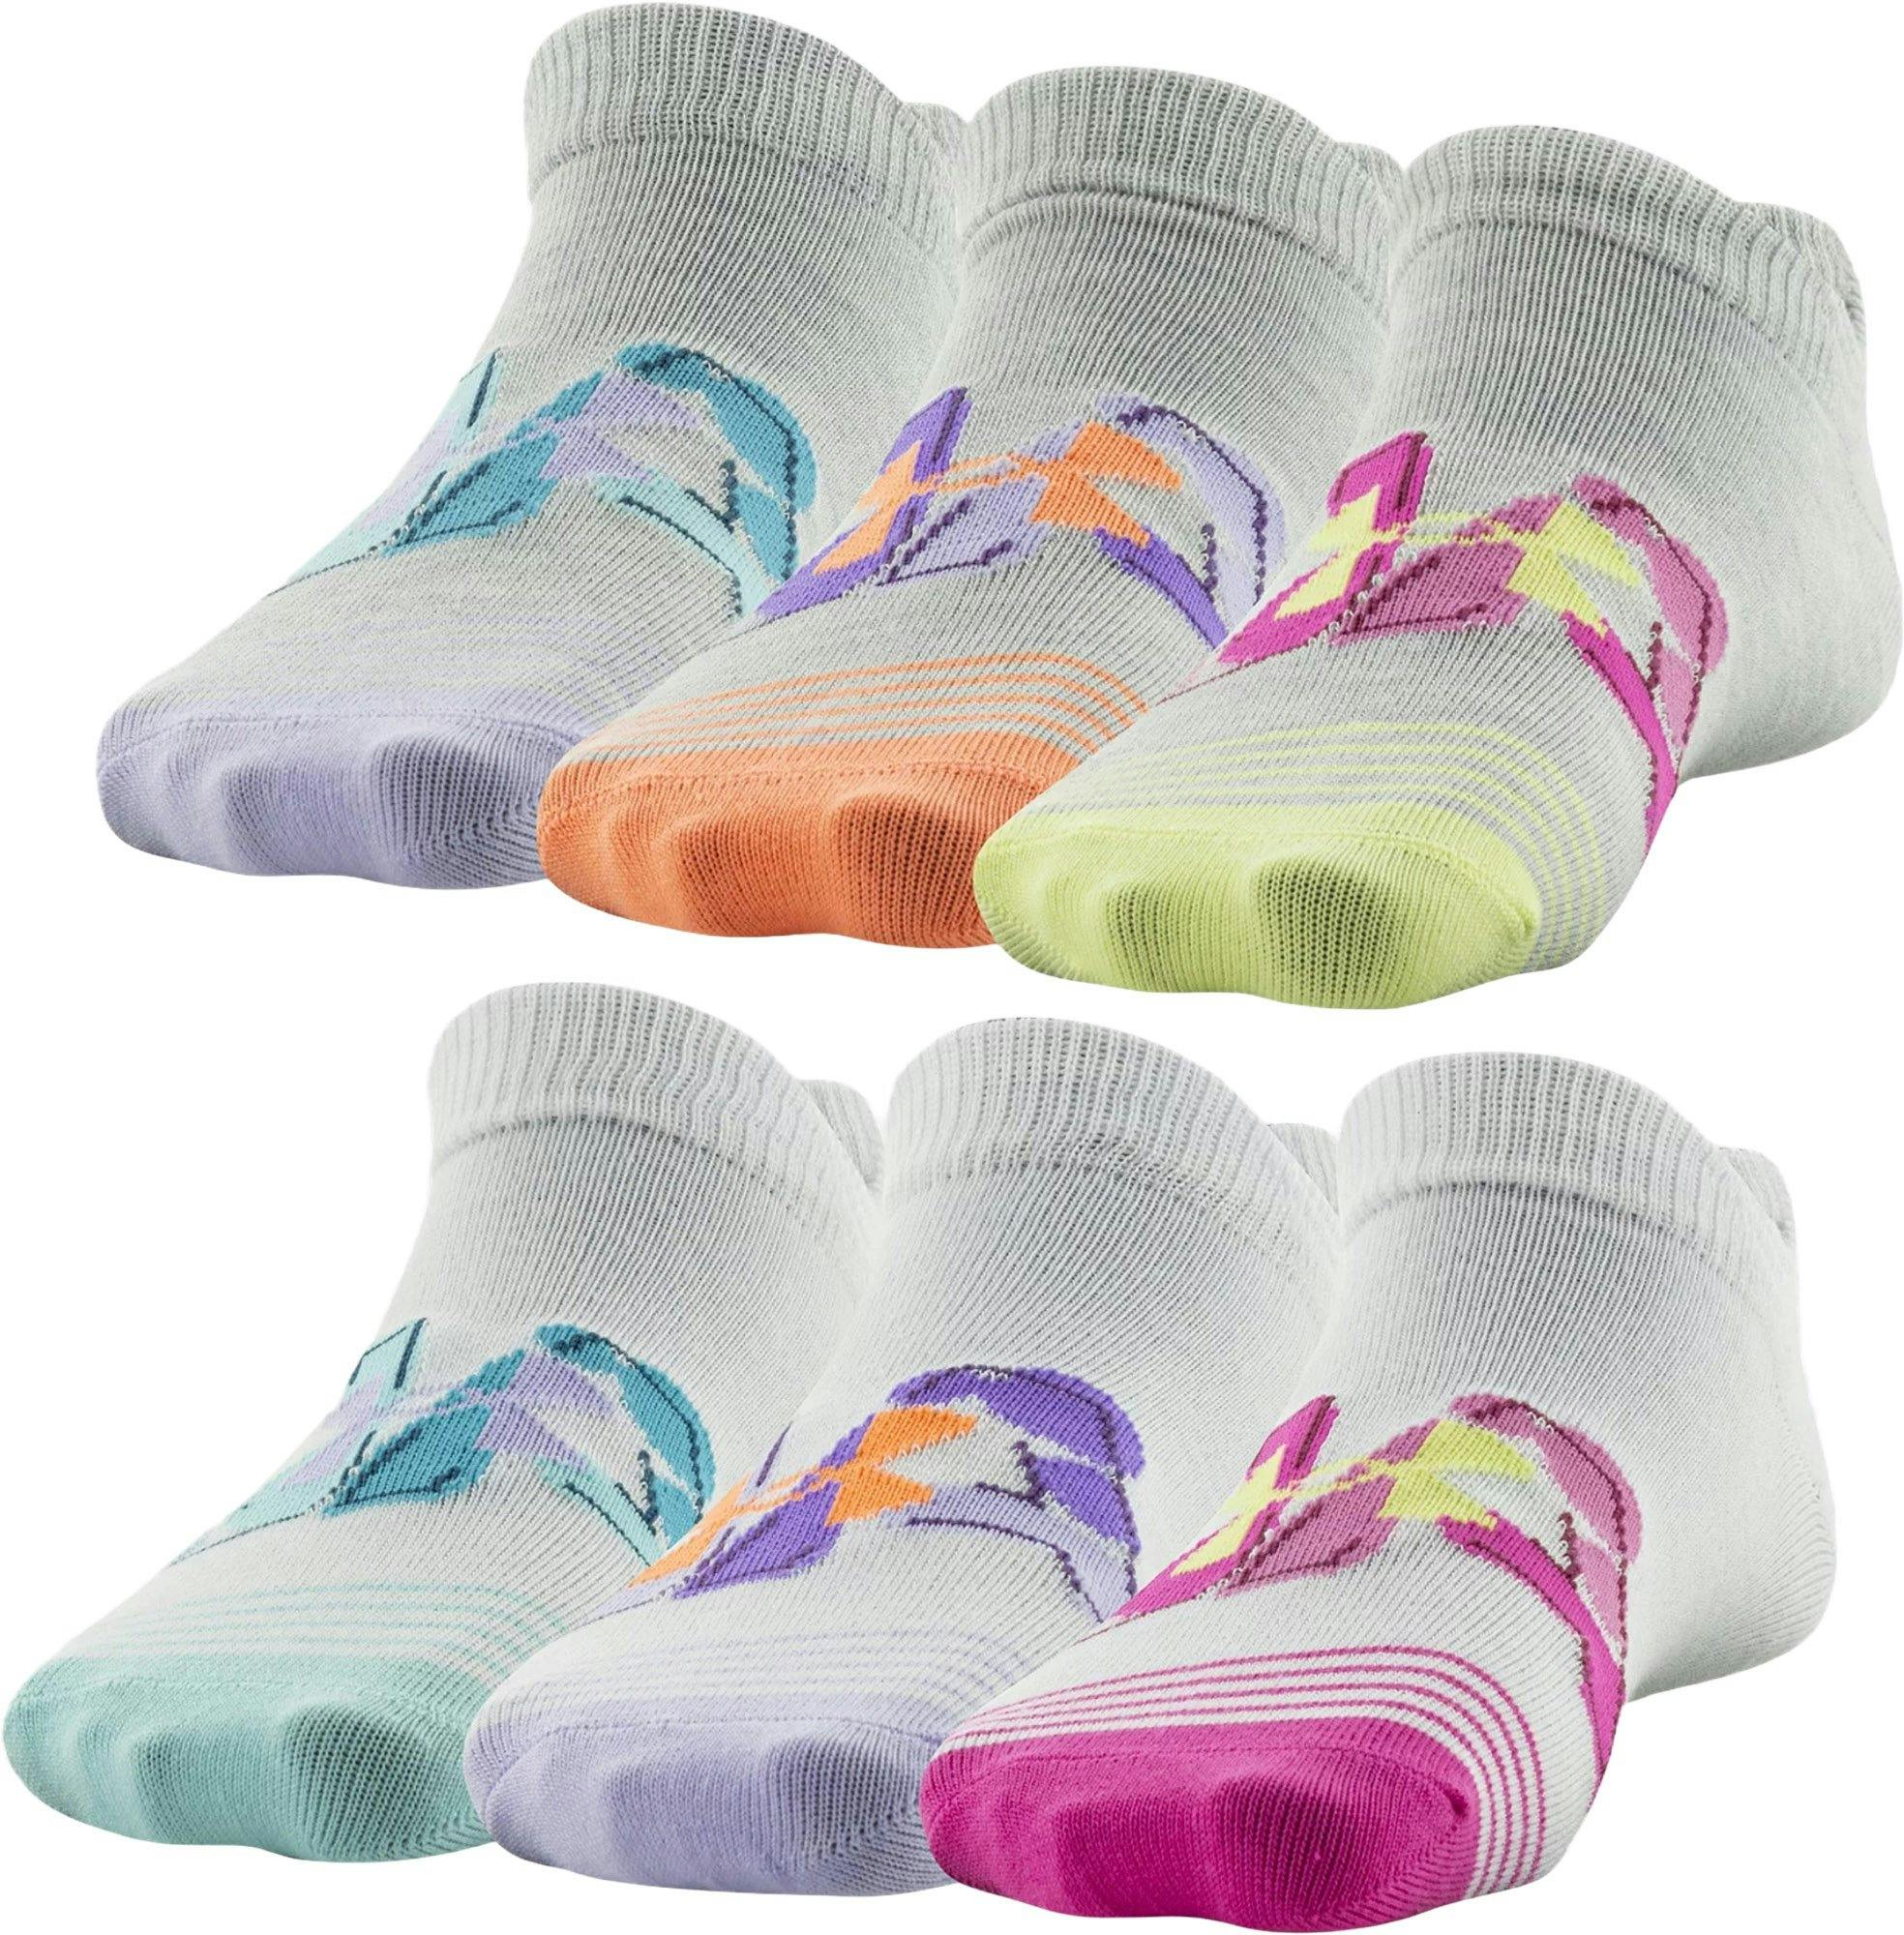 Product image for UA Essentials No Show Socks 6 Pack - Girls